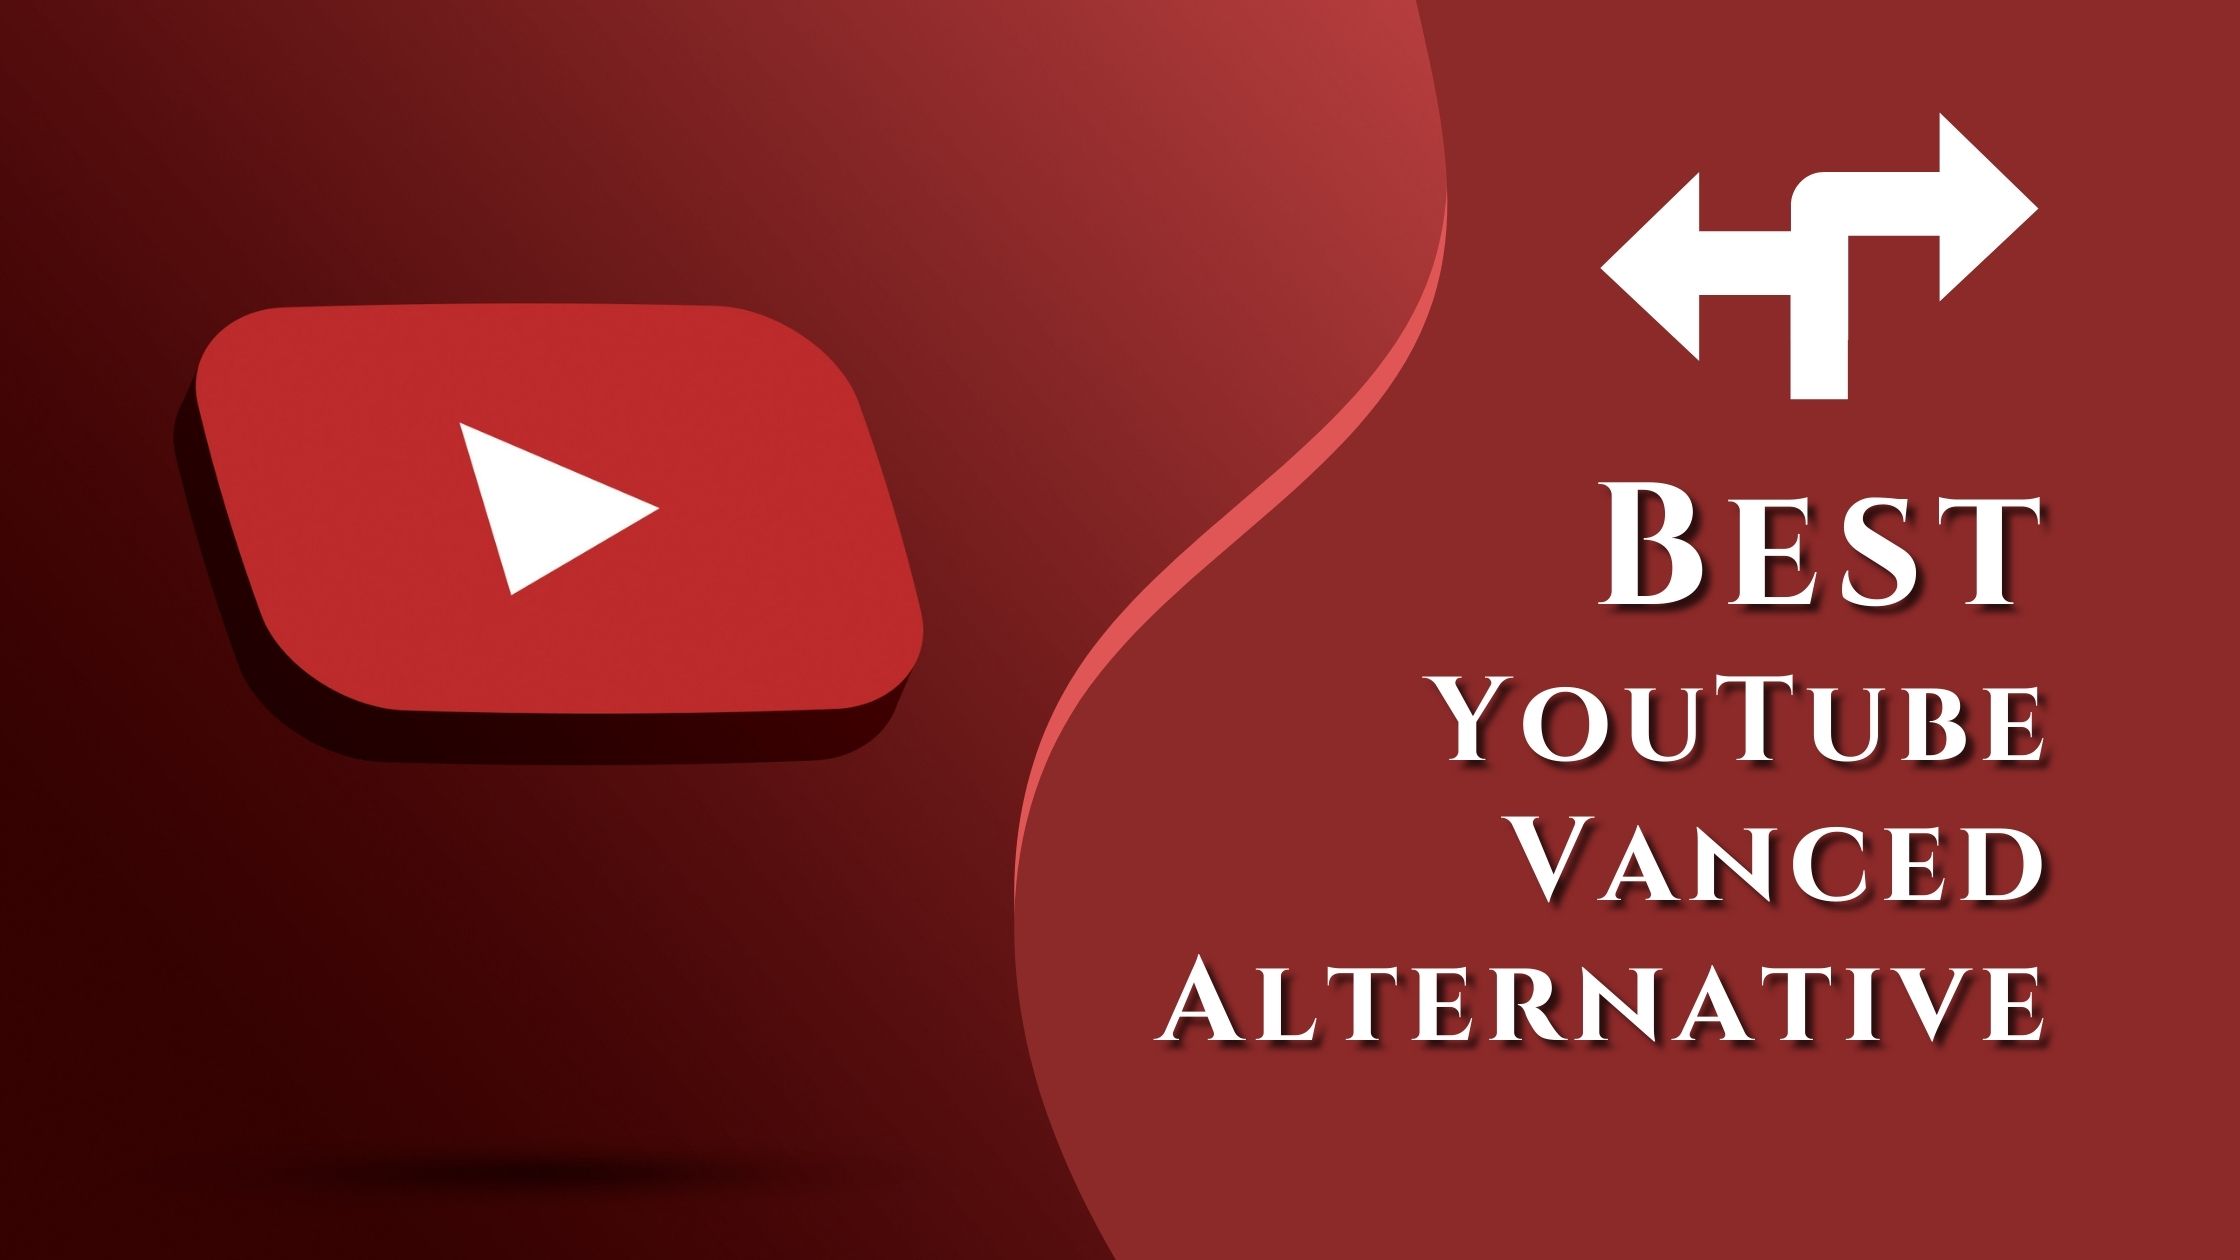 YouTube Vanced Alternative